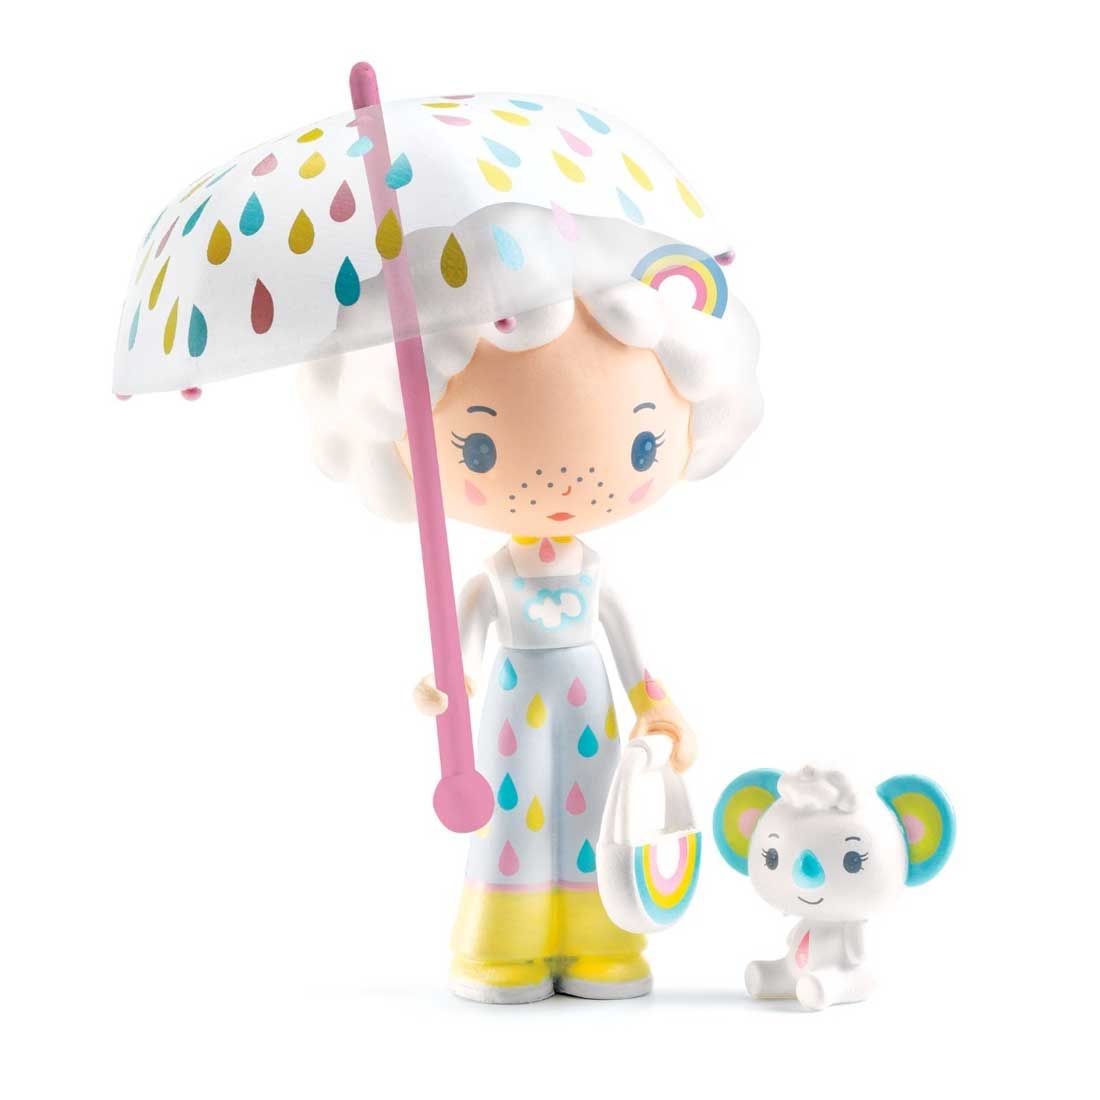 Djeco Tinyly figur i hvid pyntet med regn i regnbuens farver samt en koala i matchende farver.